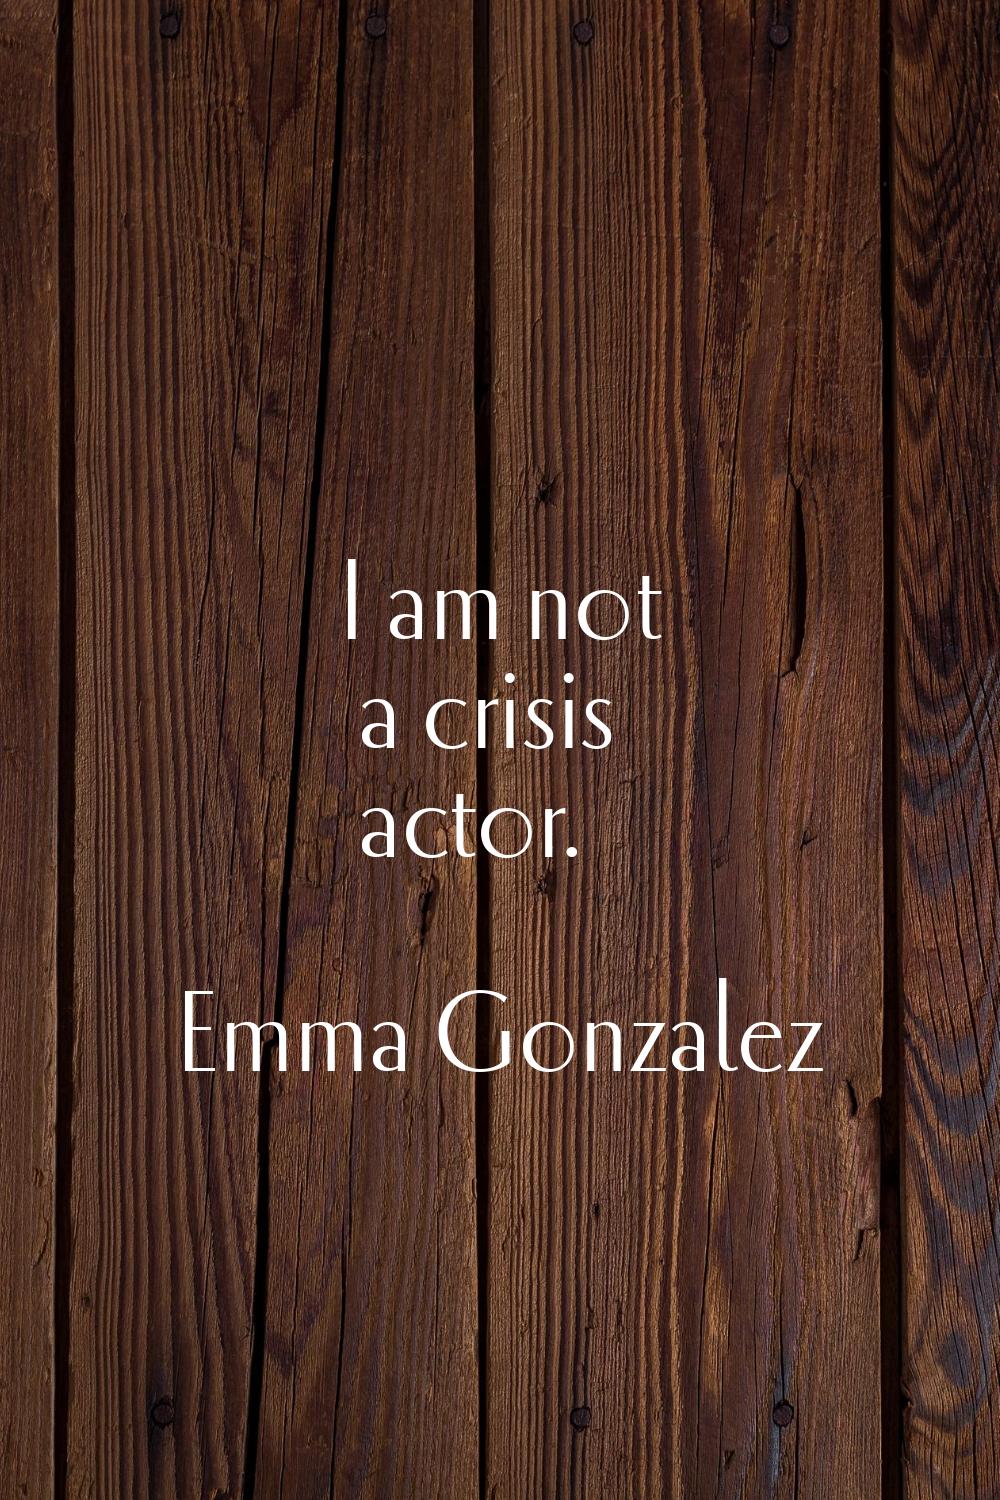 I am not a crisis actor.